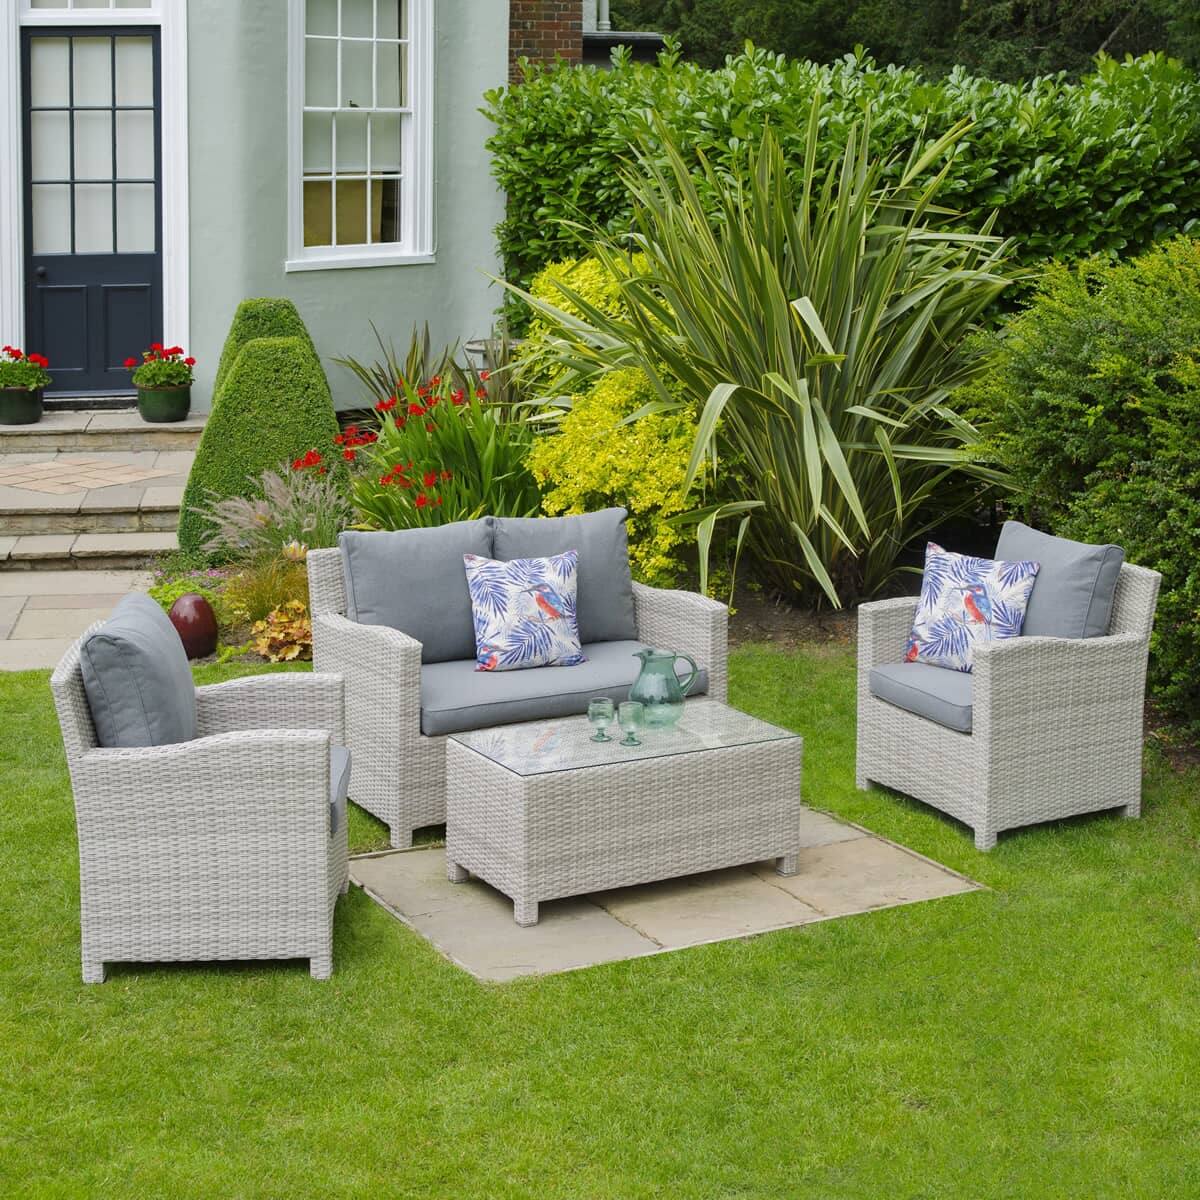 LG Outdoors Provence 2 Seat Sofa Lounge Set